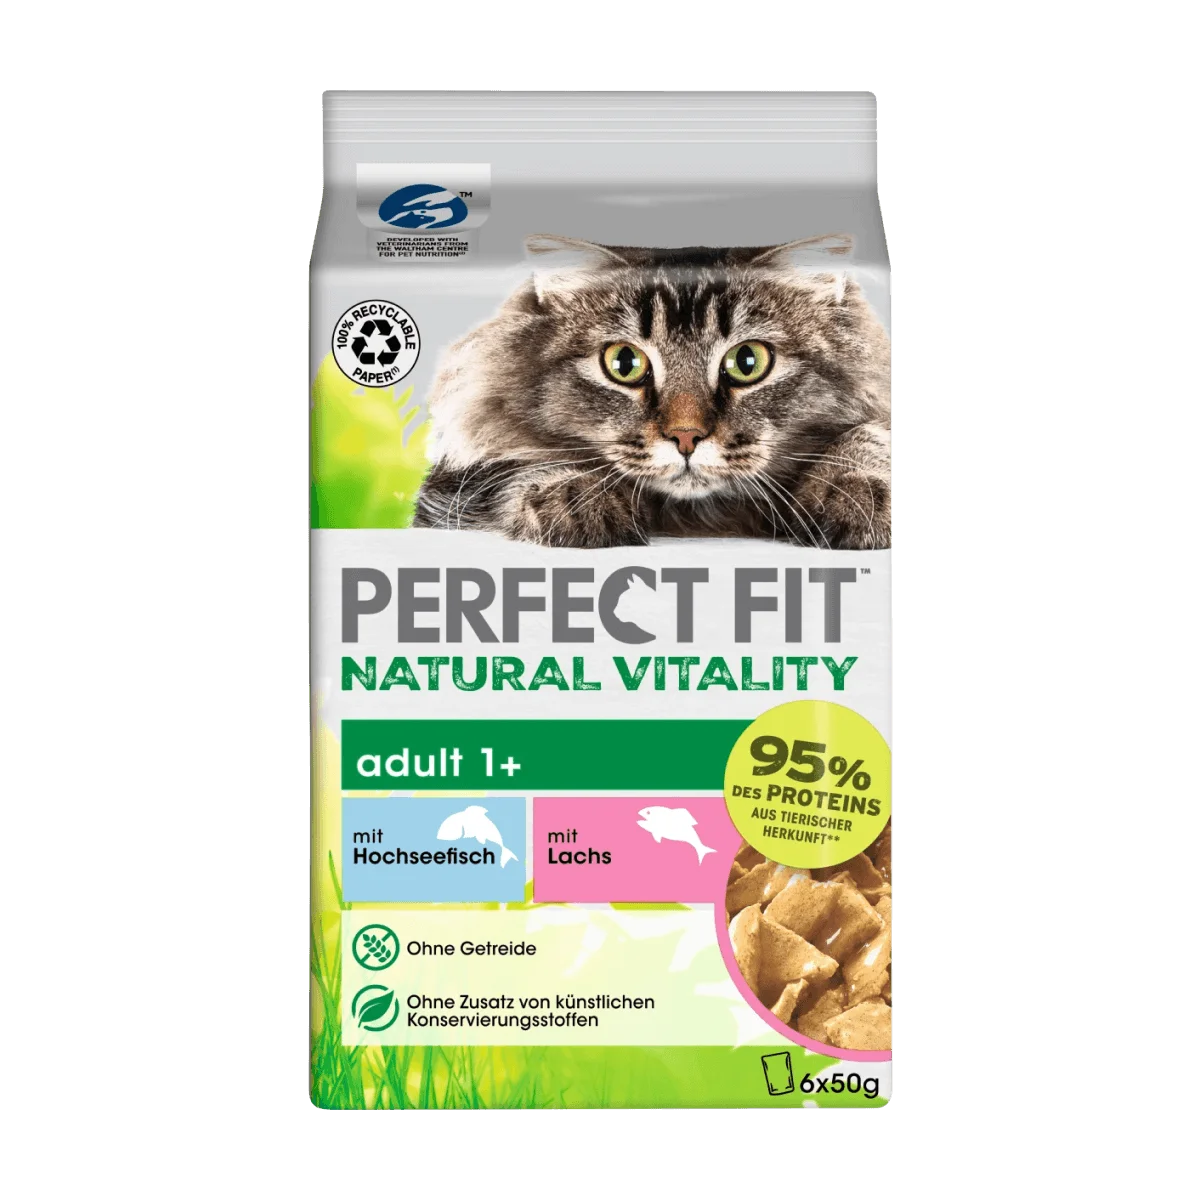 PERFECT FIT Nassfutter Katze mit Hochseefisch & Lachs, natural vitality, Multipack (6x50 g), 300 g